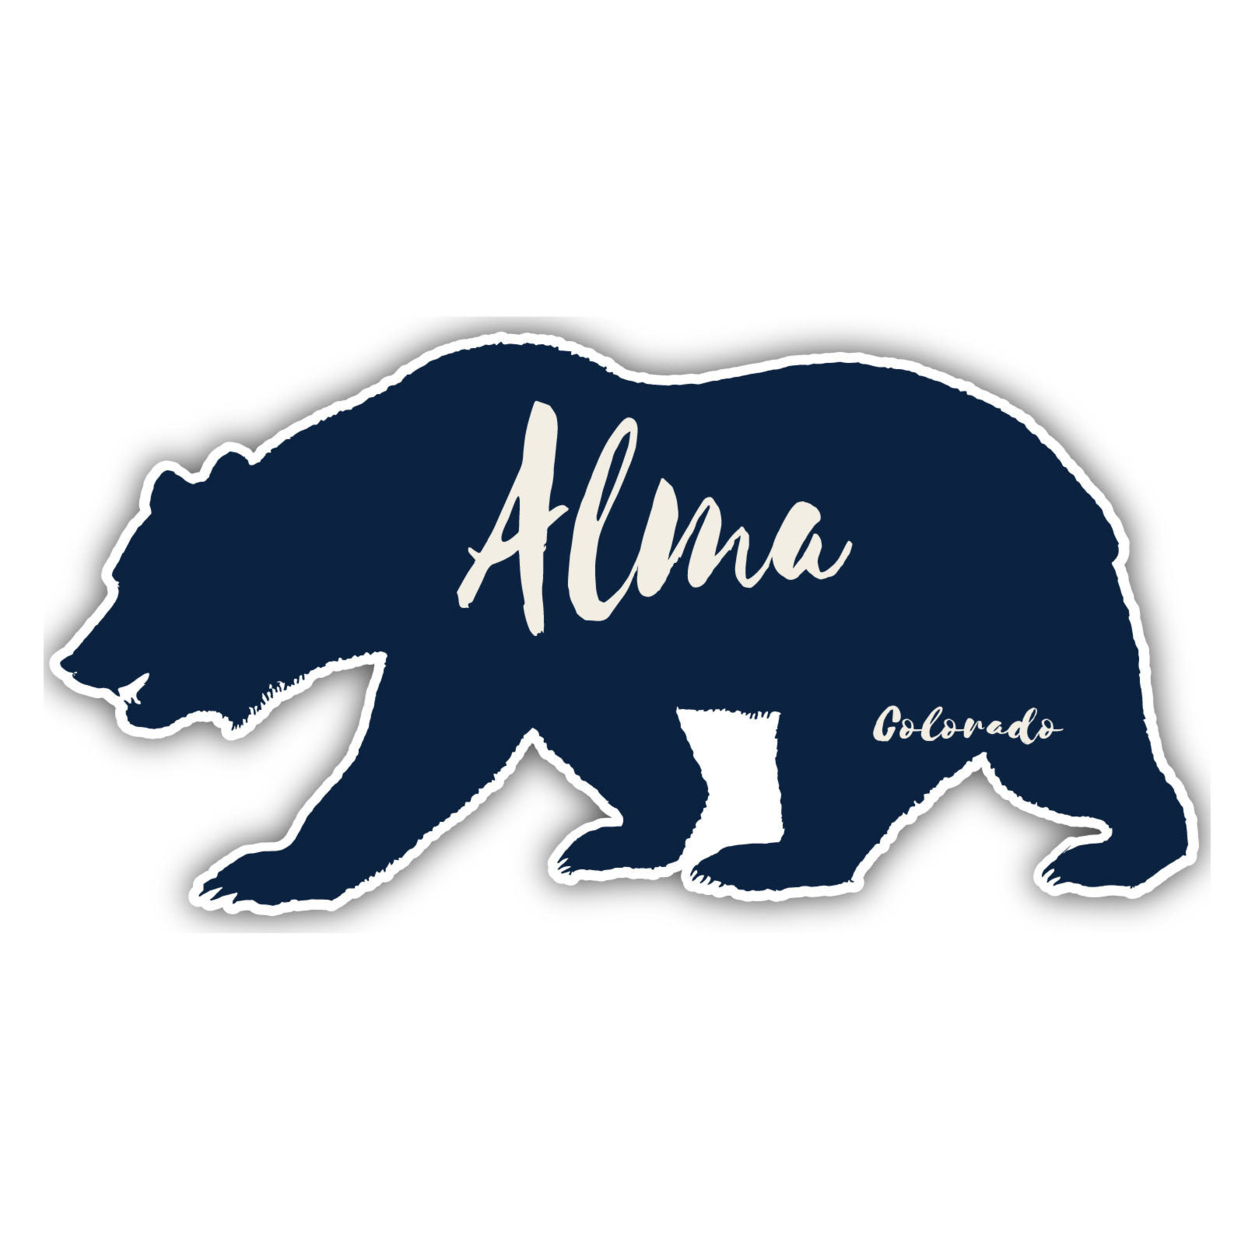 Alma Colorado Souvenir Decorative Stickers (Choose Theme And Size) - Single Unit, 2-Inch, Adventures Awaits